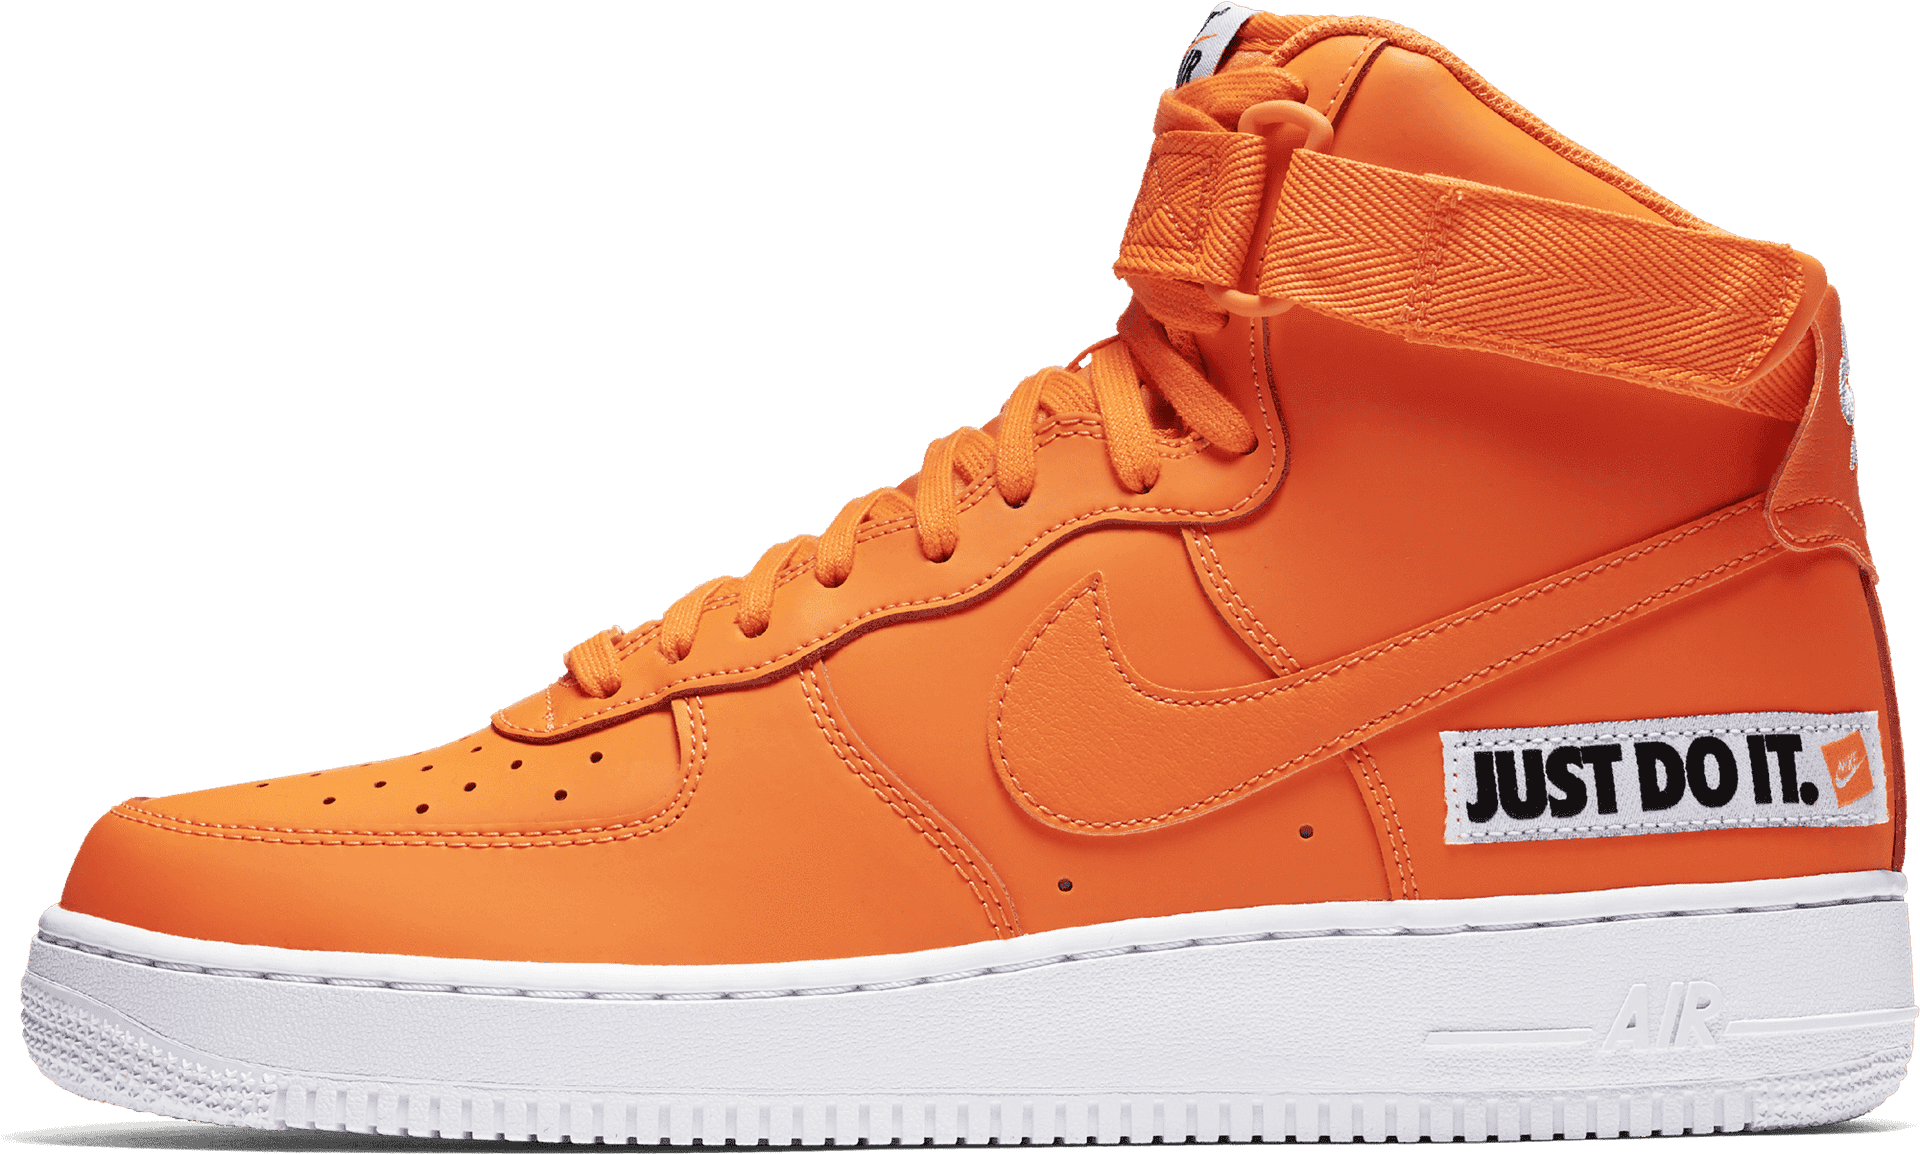 Orange Nike Air Force1 High Top Sneaker PNG image